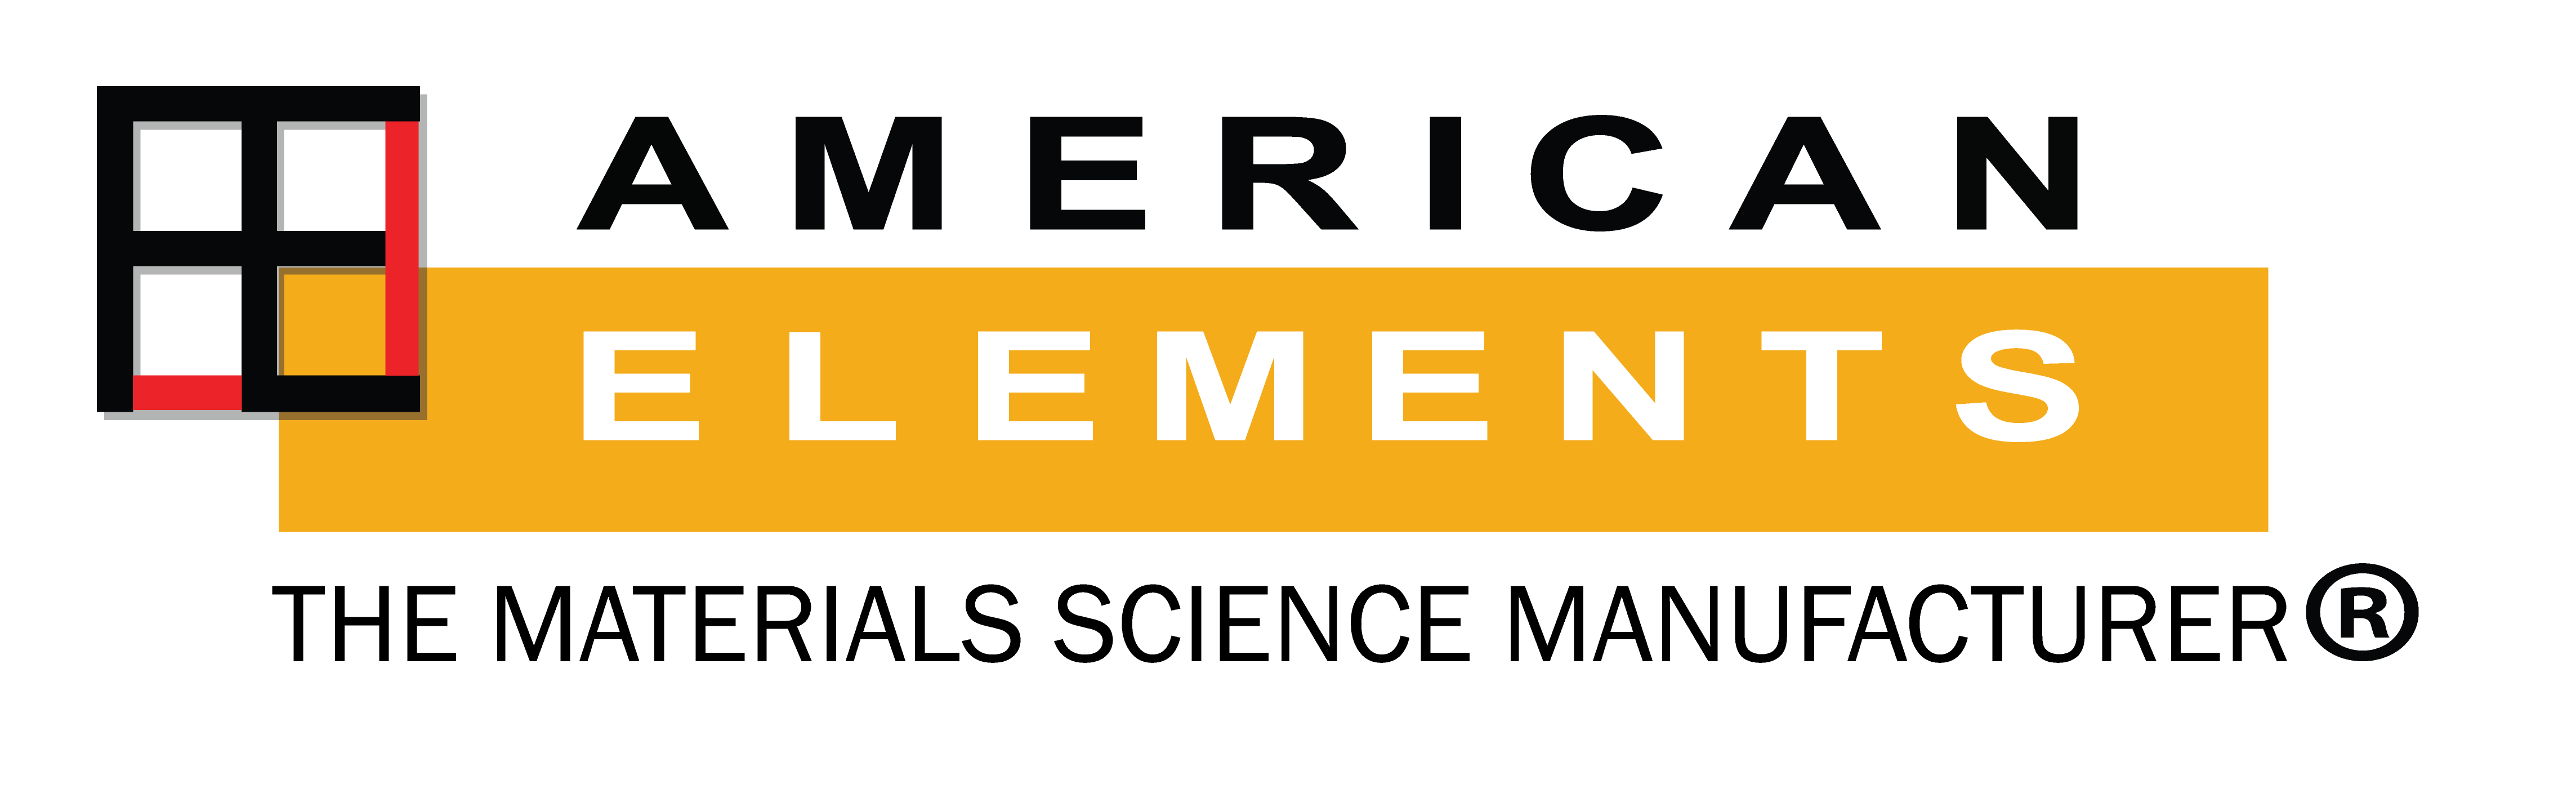 american elements 2016